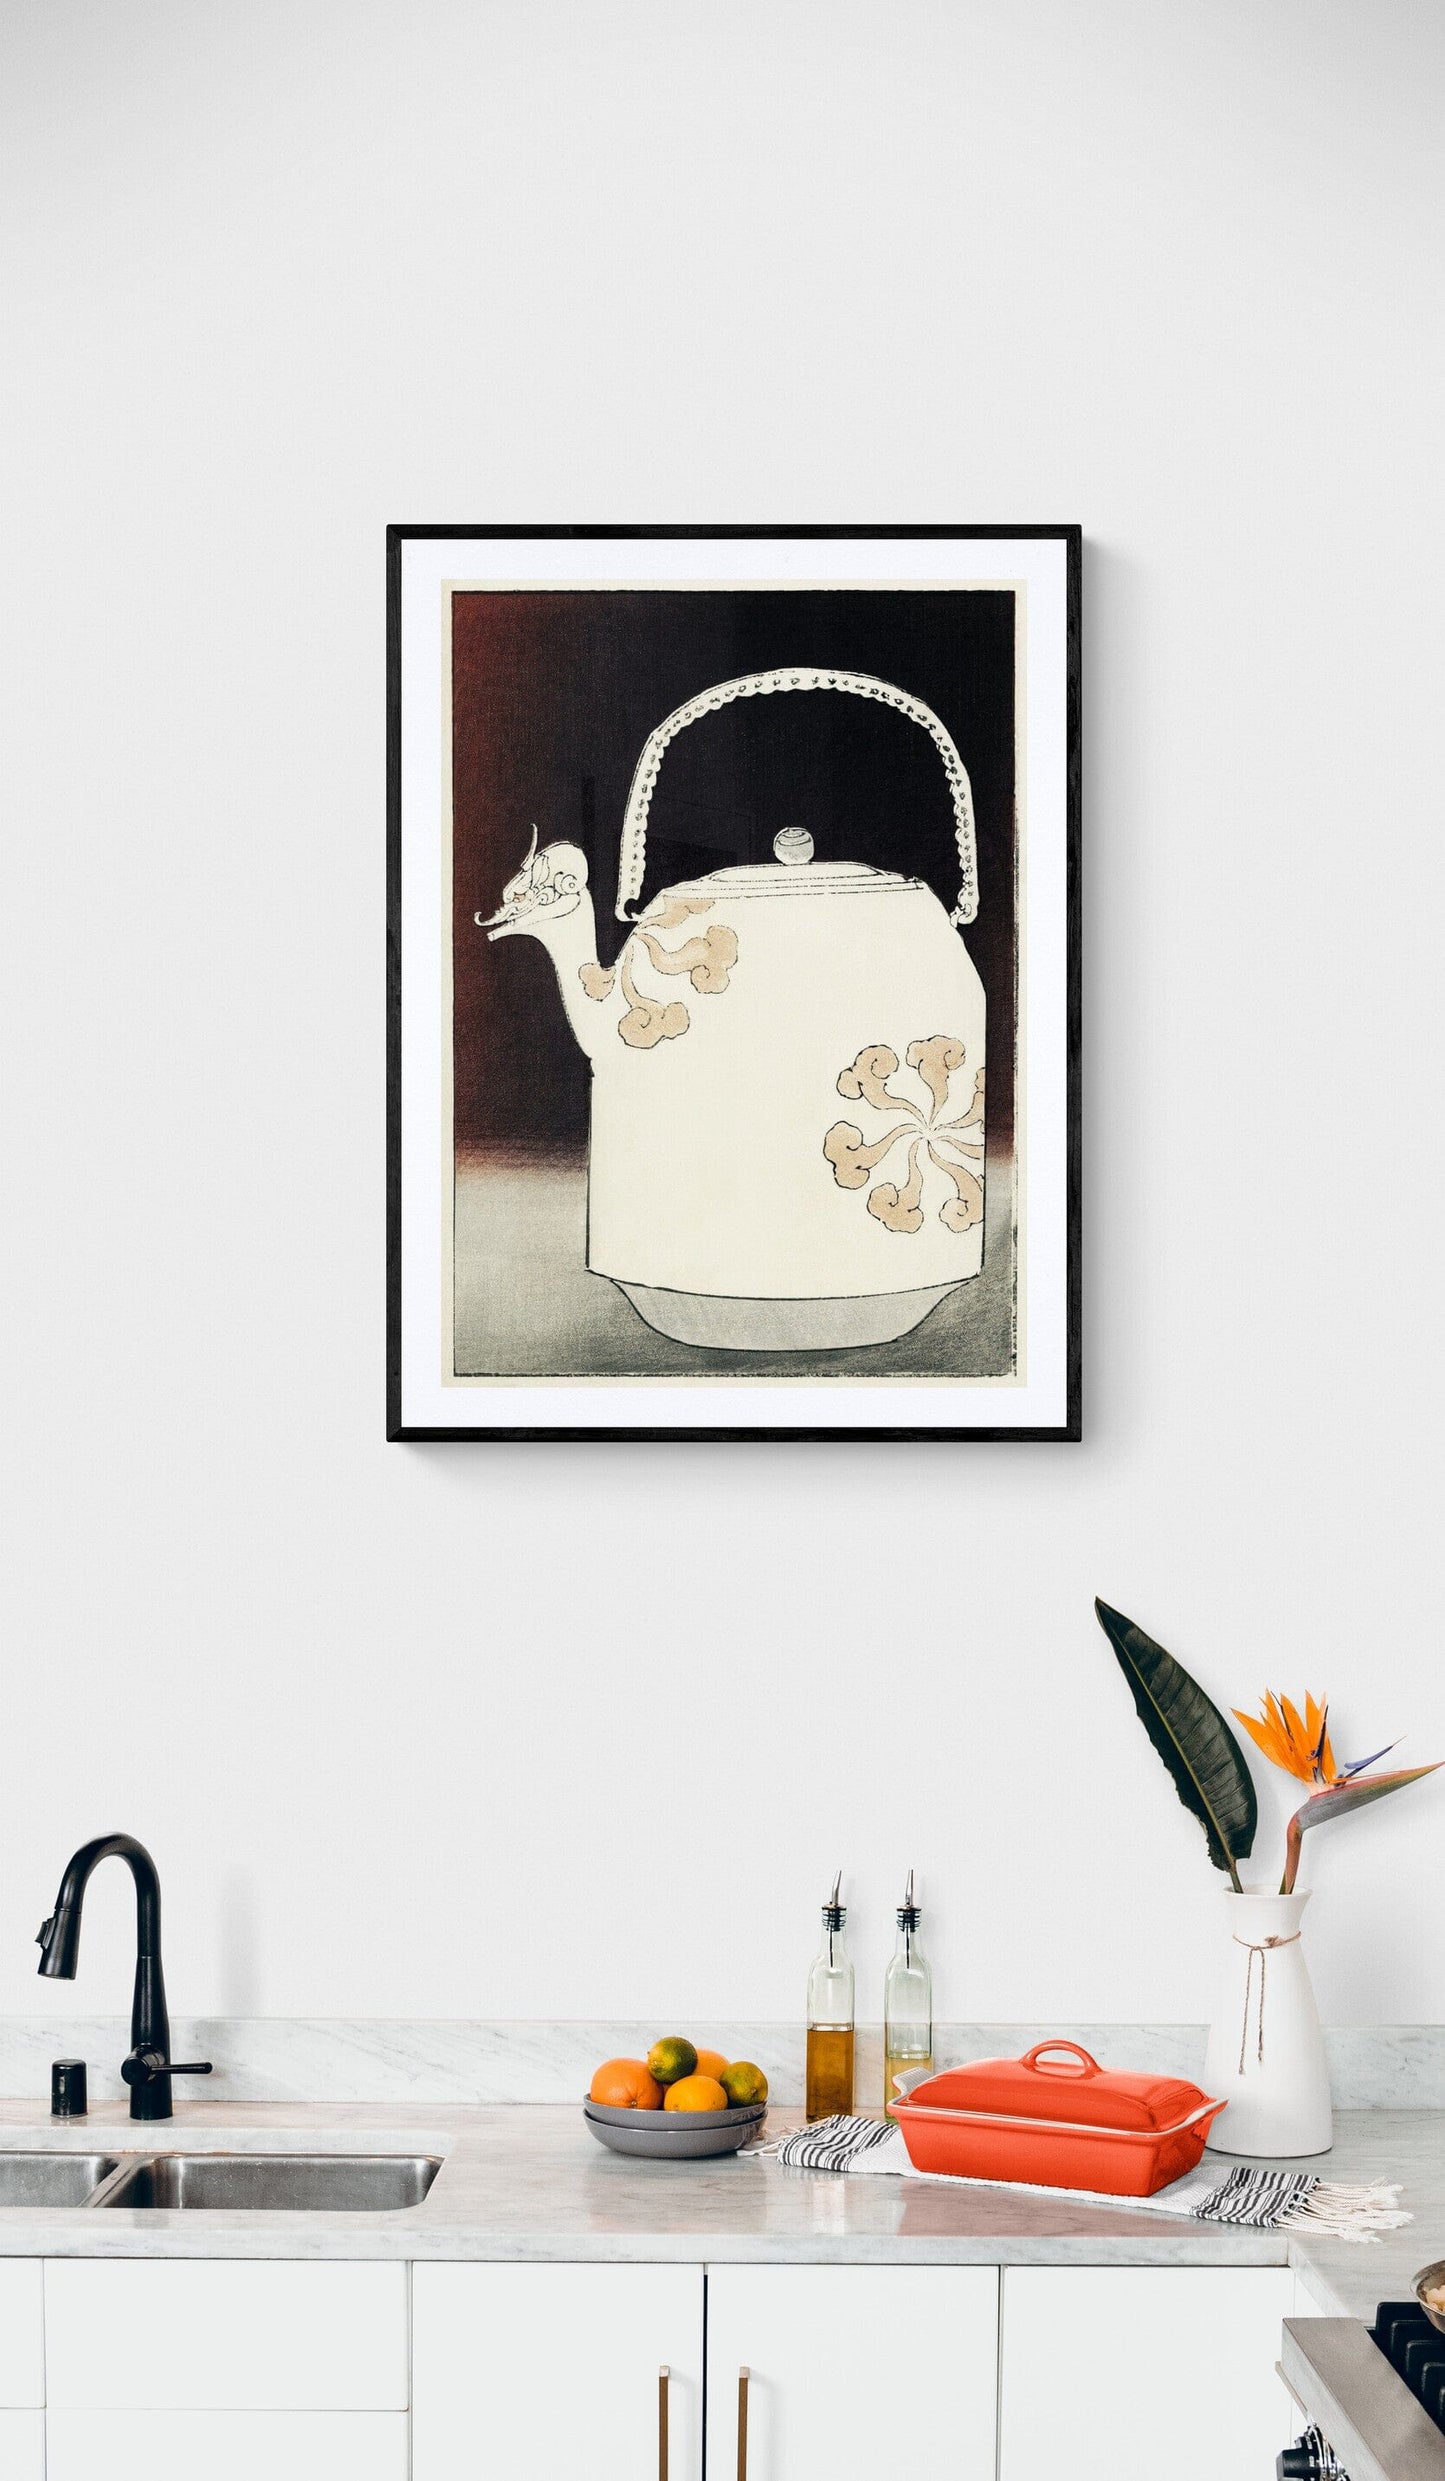 East Asian inspired kettle (1890s) | Vintage kitchen prints  The Trumpet Shop   